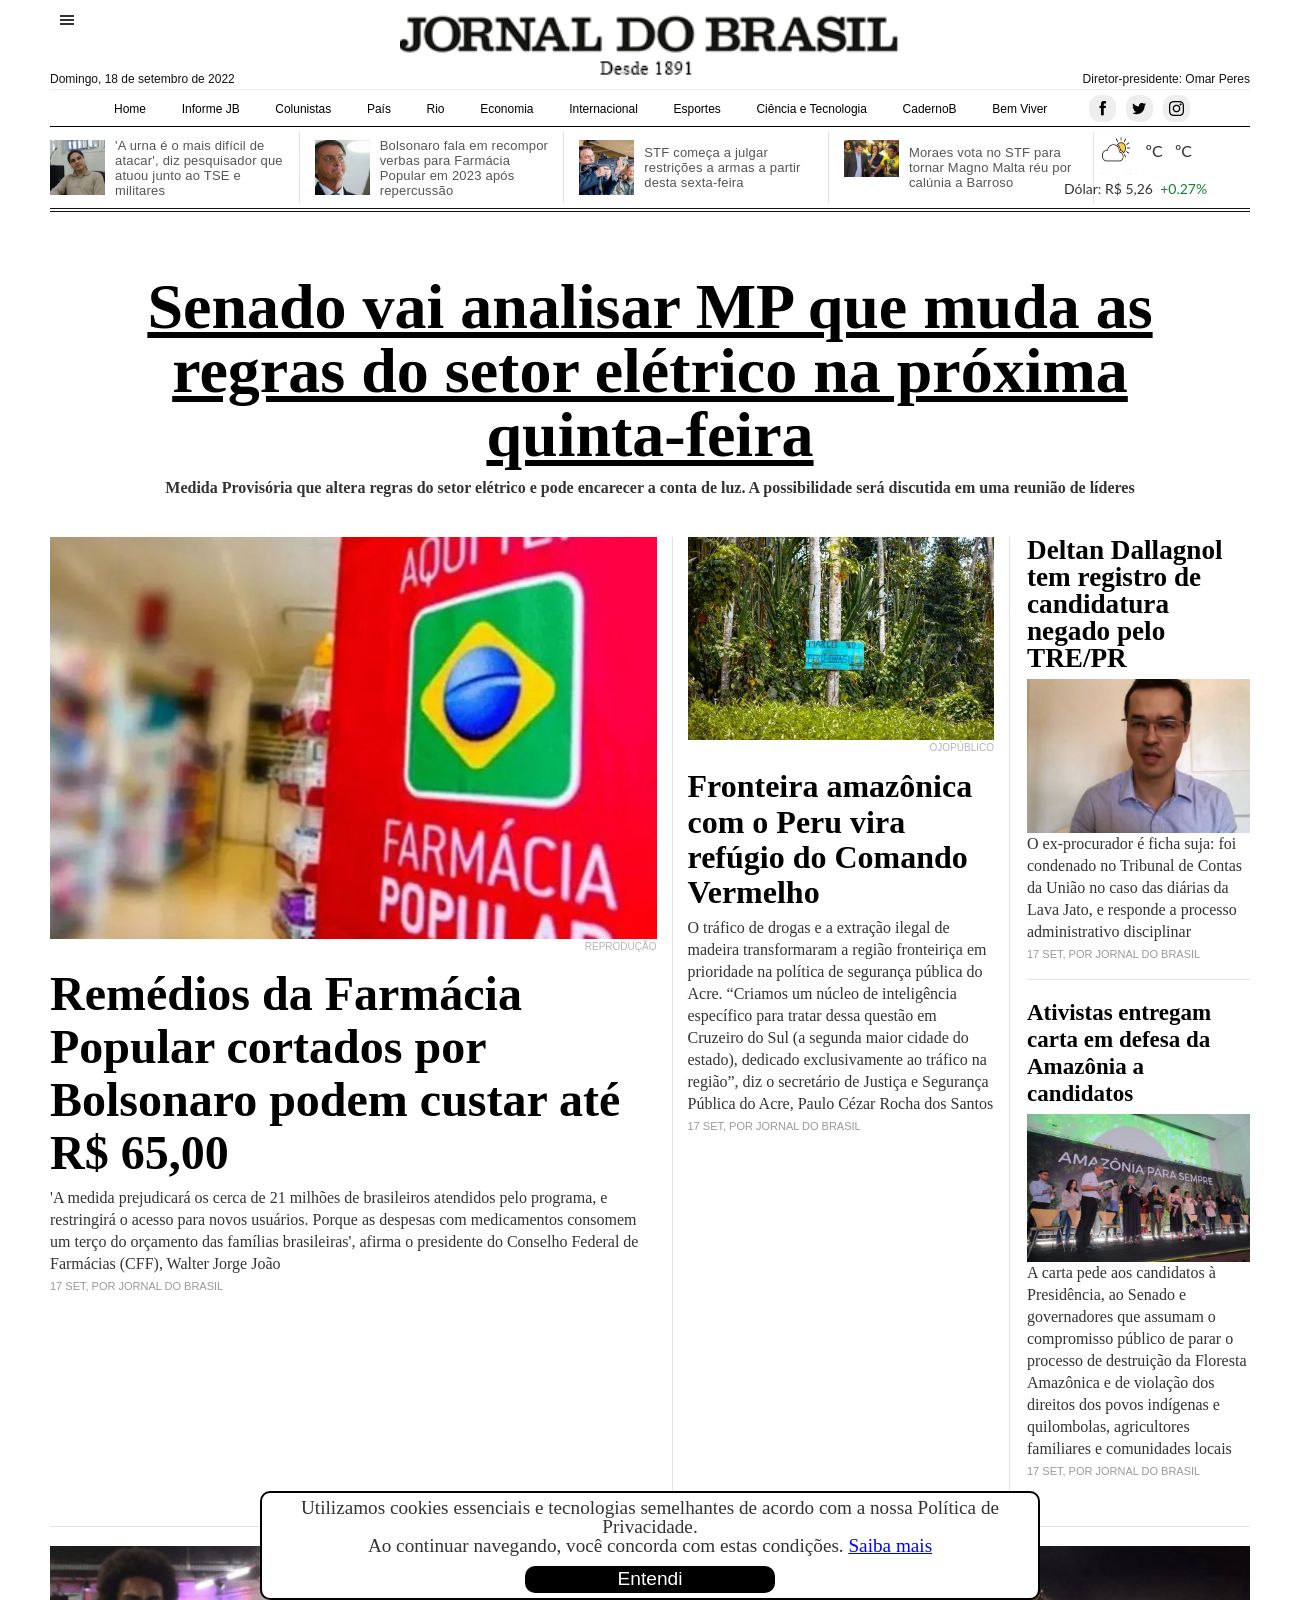 Jornal do Brasil at 2022-09-18 09:01:20-03:00 local time